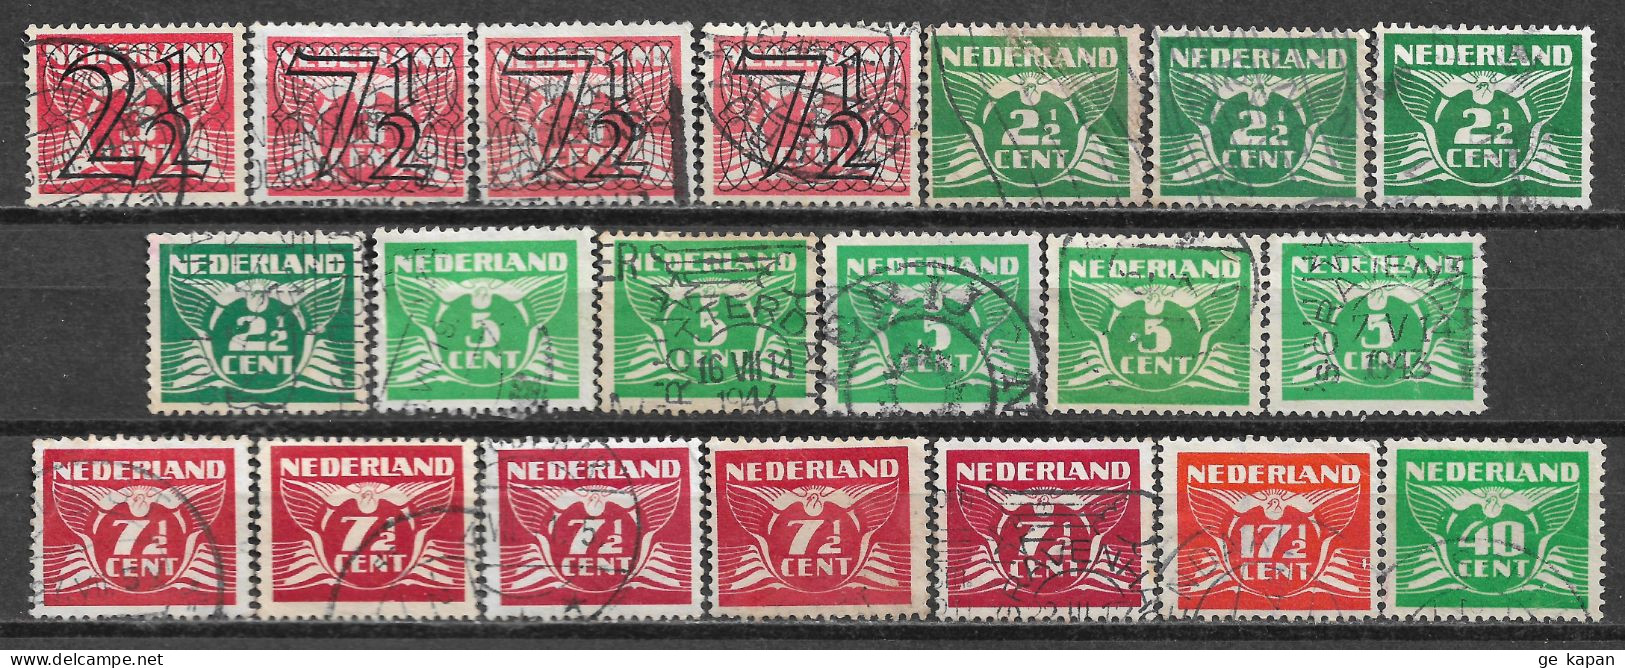 1940-1941 NETHERLANDS SET OF 20 USED STAMPS (Scott # 226,228,243A,243C,243E,243K,243P) CV $4.60 - Usati